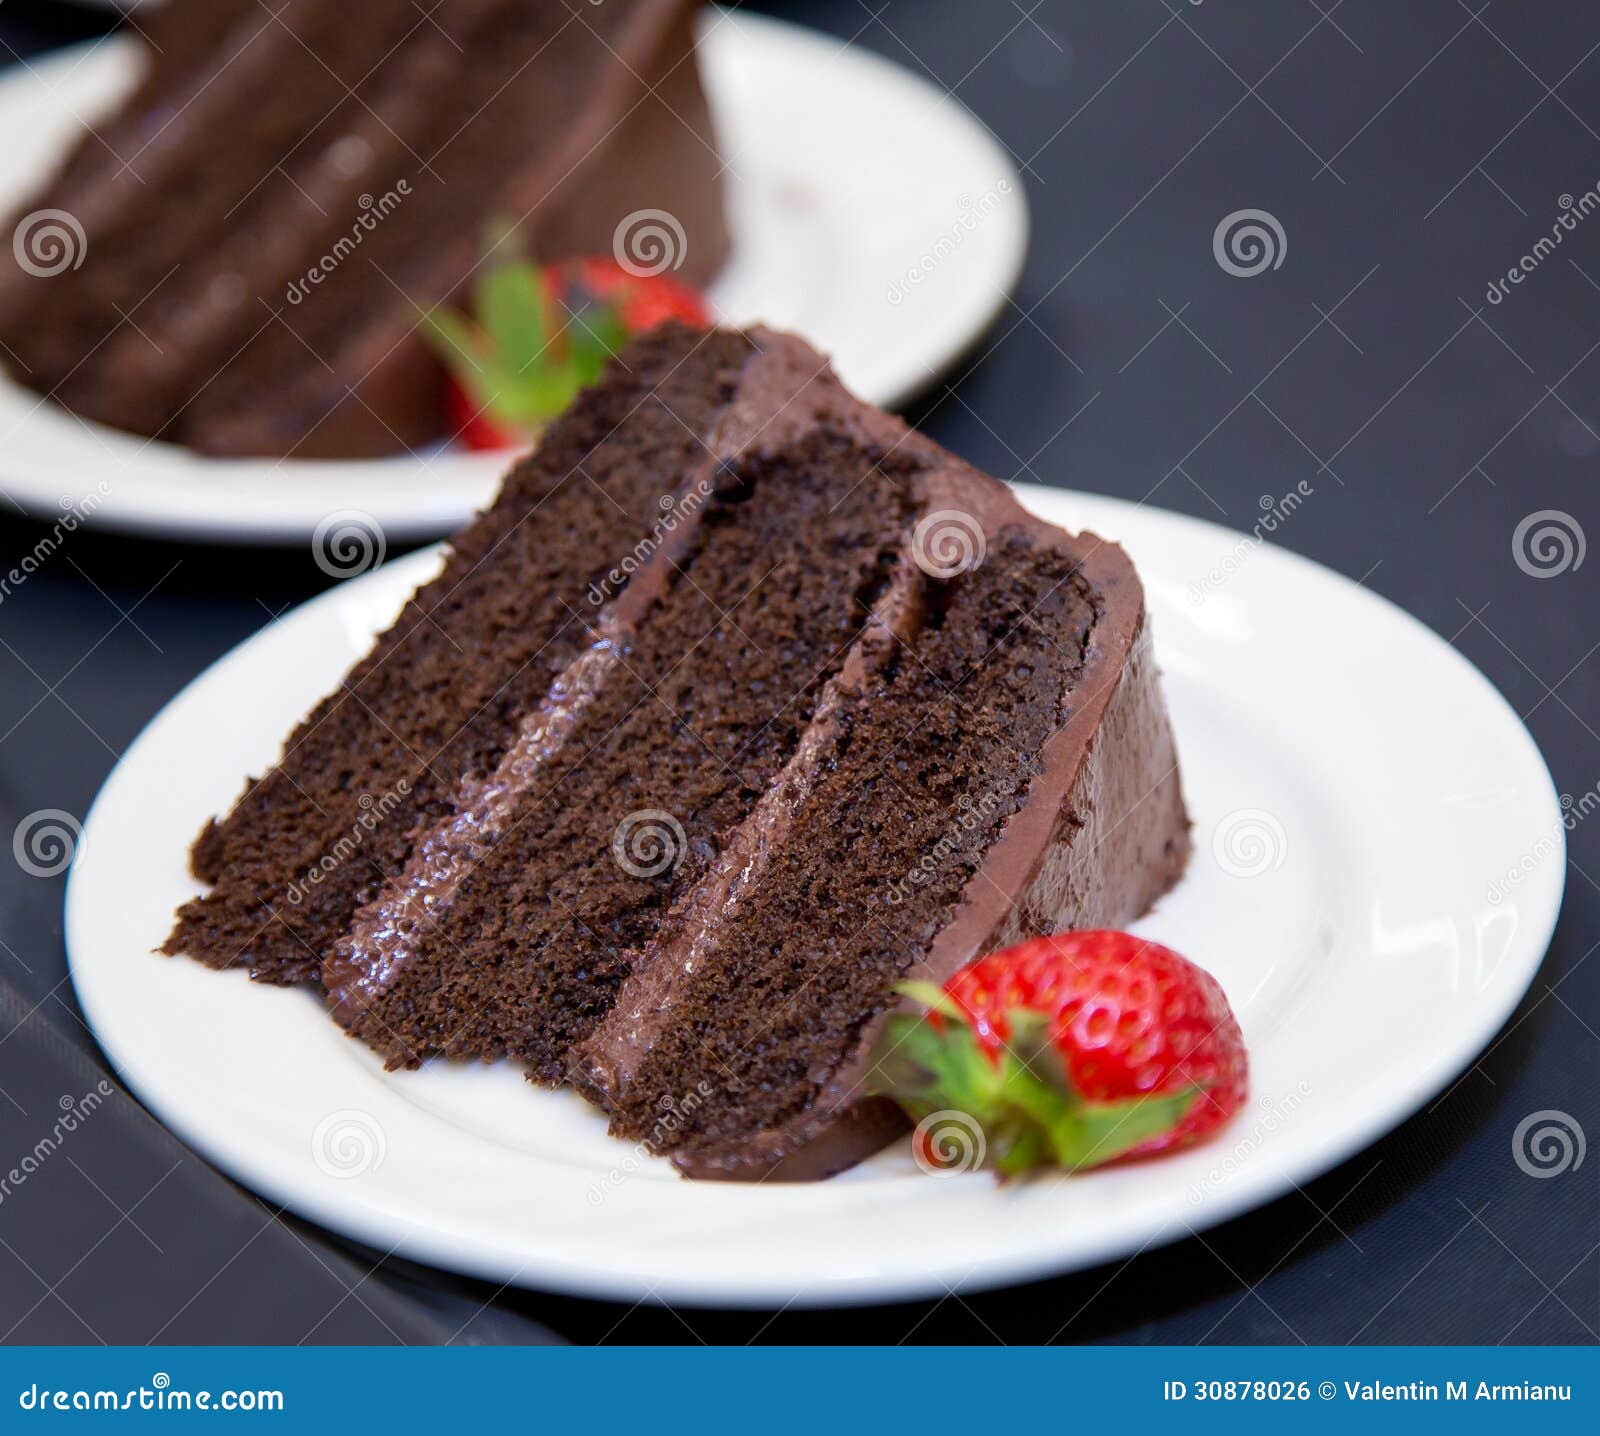 chocolate layer cake - slice